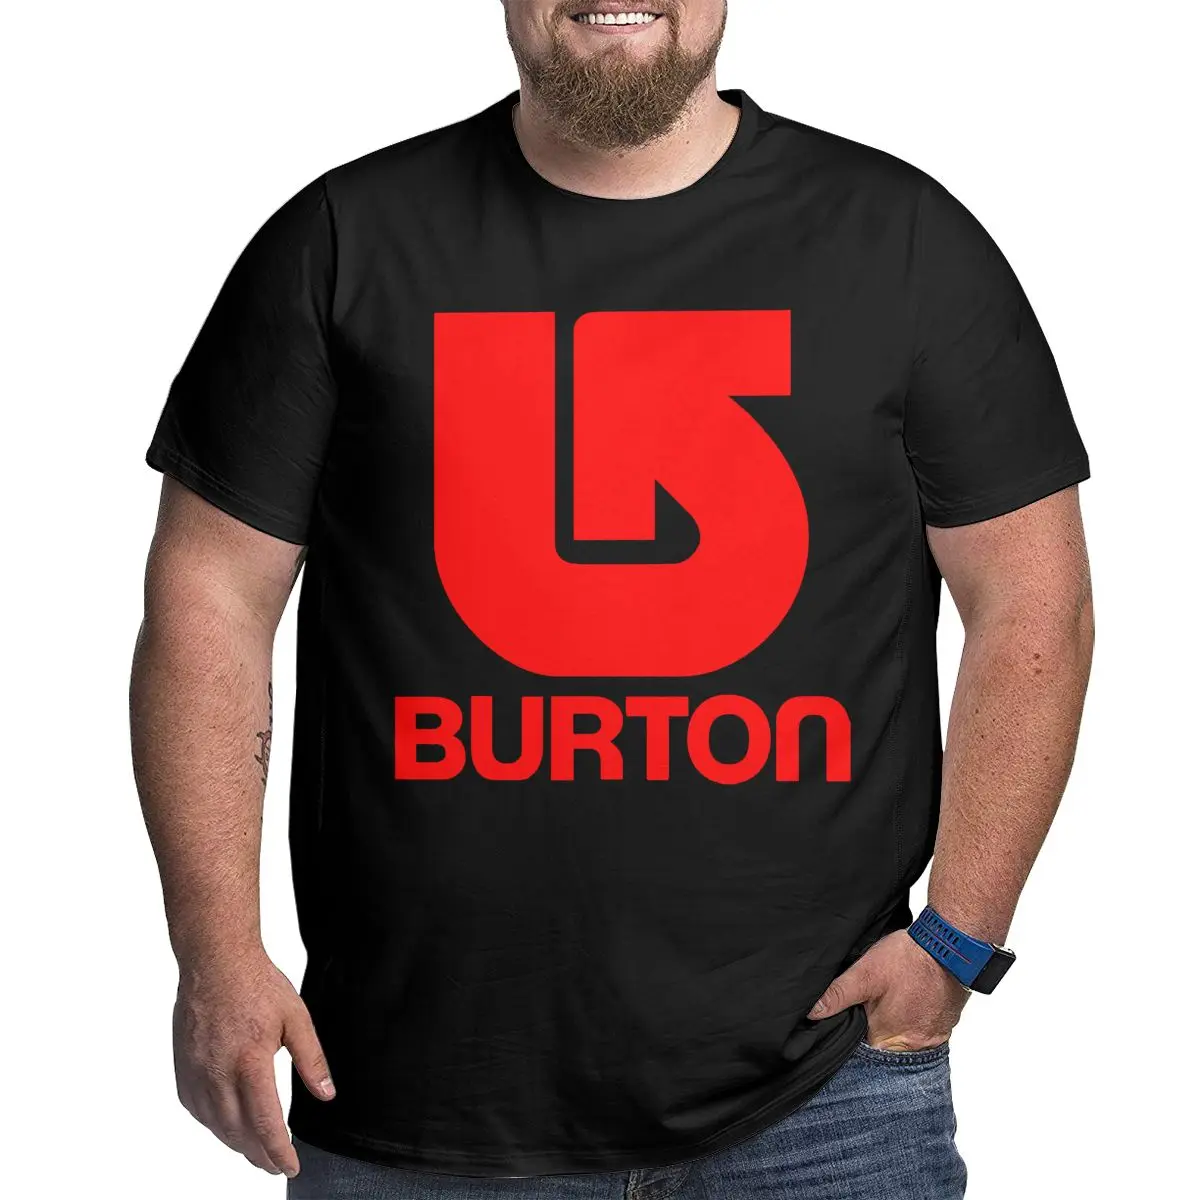 

Burton Snowboards Custom Red Arrow Logo 100% Cotton T Shirts for Big Tall Man Oversized Plus Size Top Tee Men's Loose Large Top